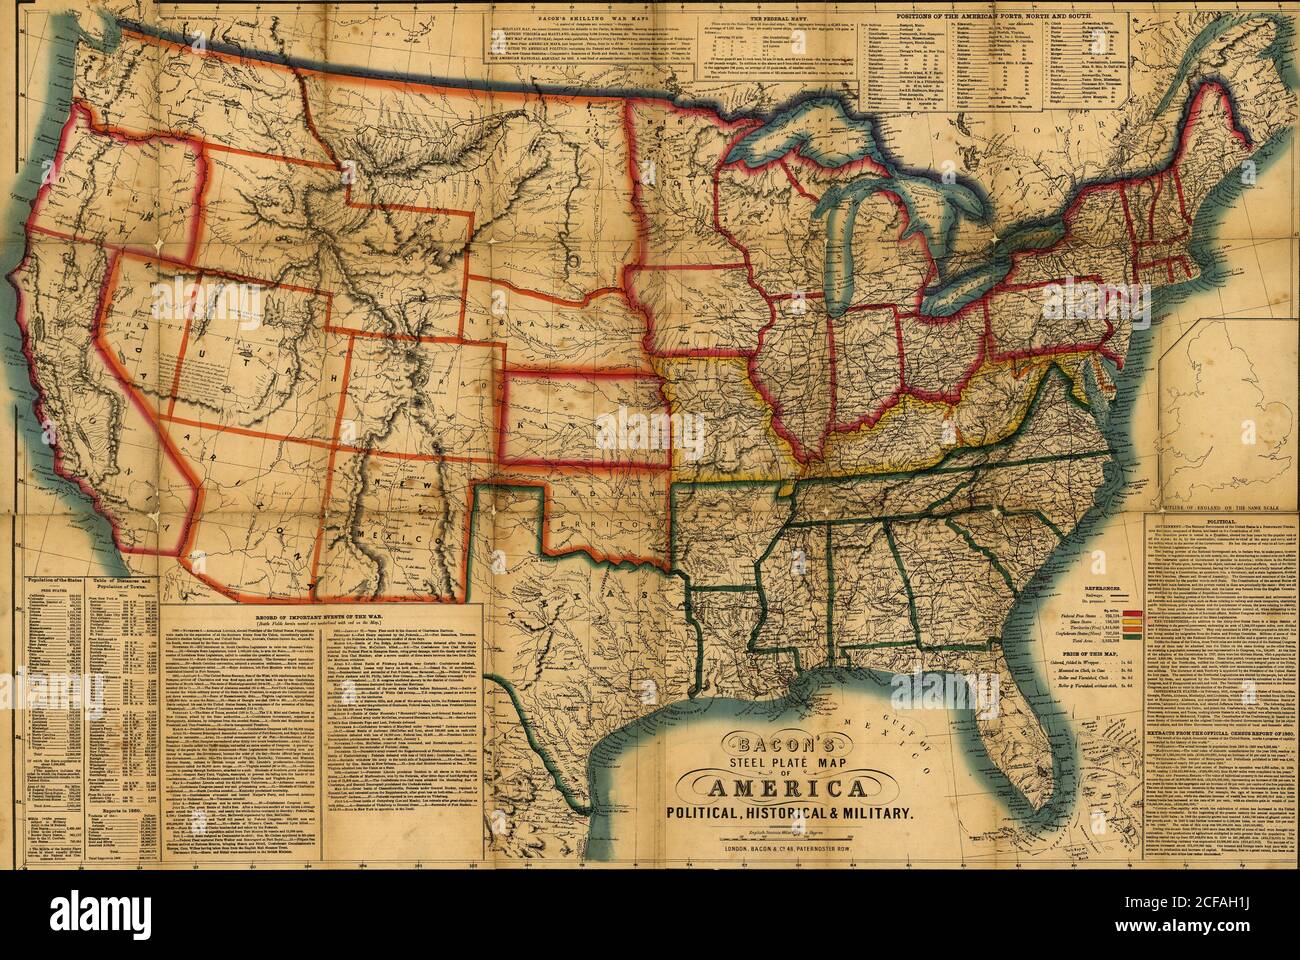 US In the Civil War Period - 1863 Stock Photo